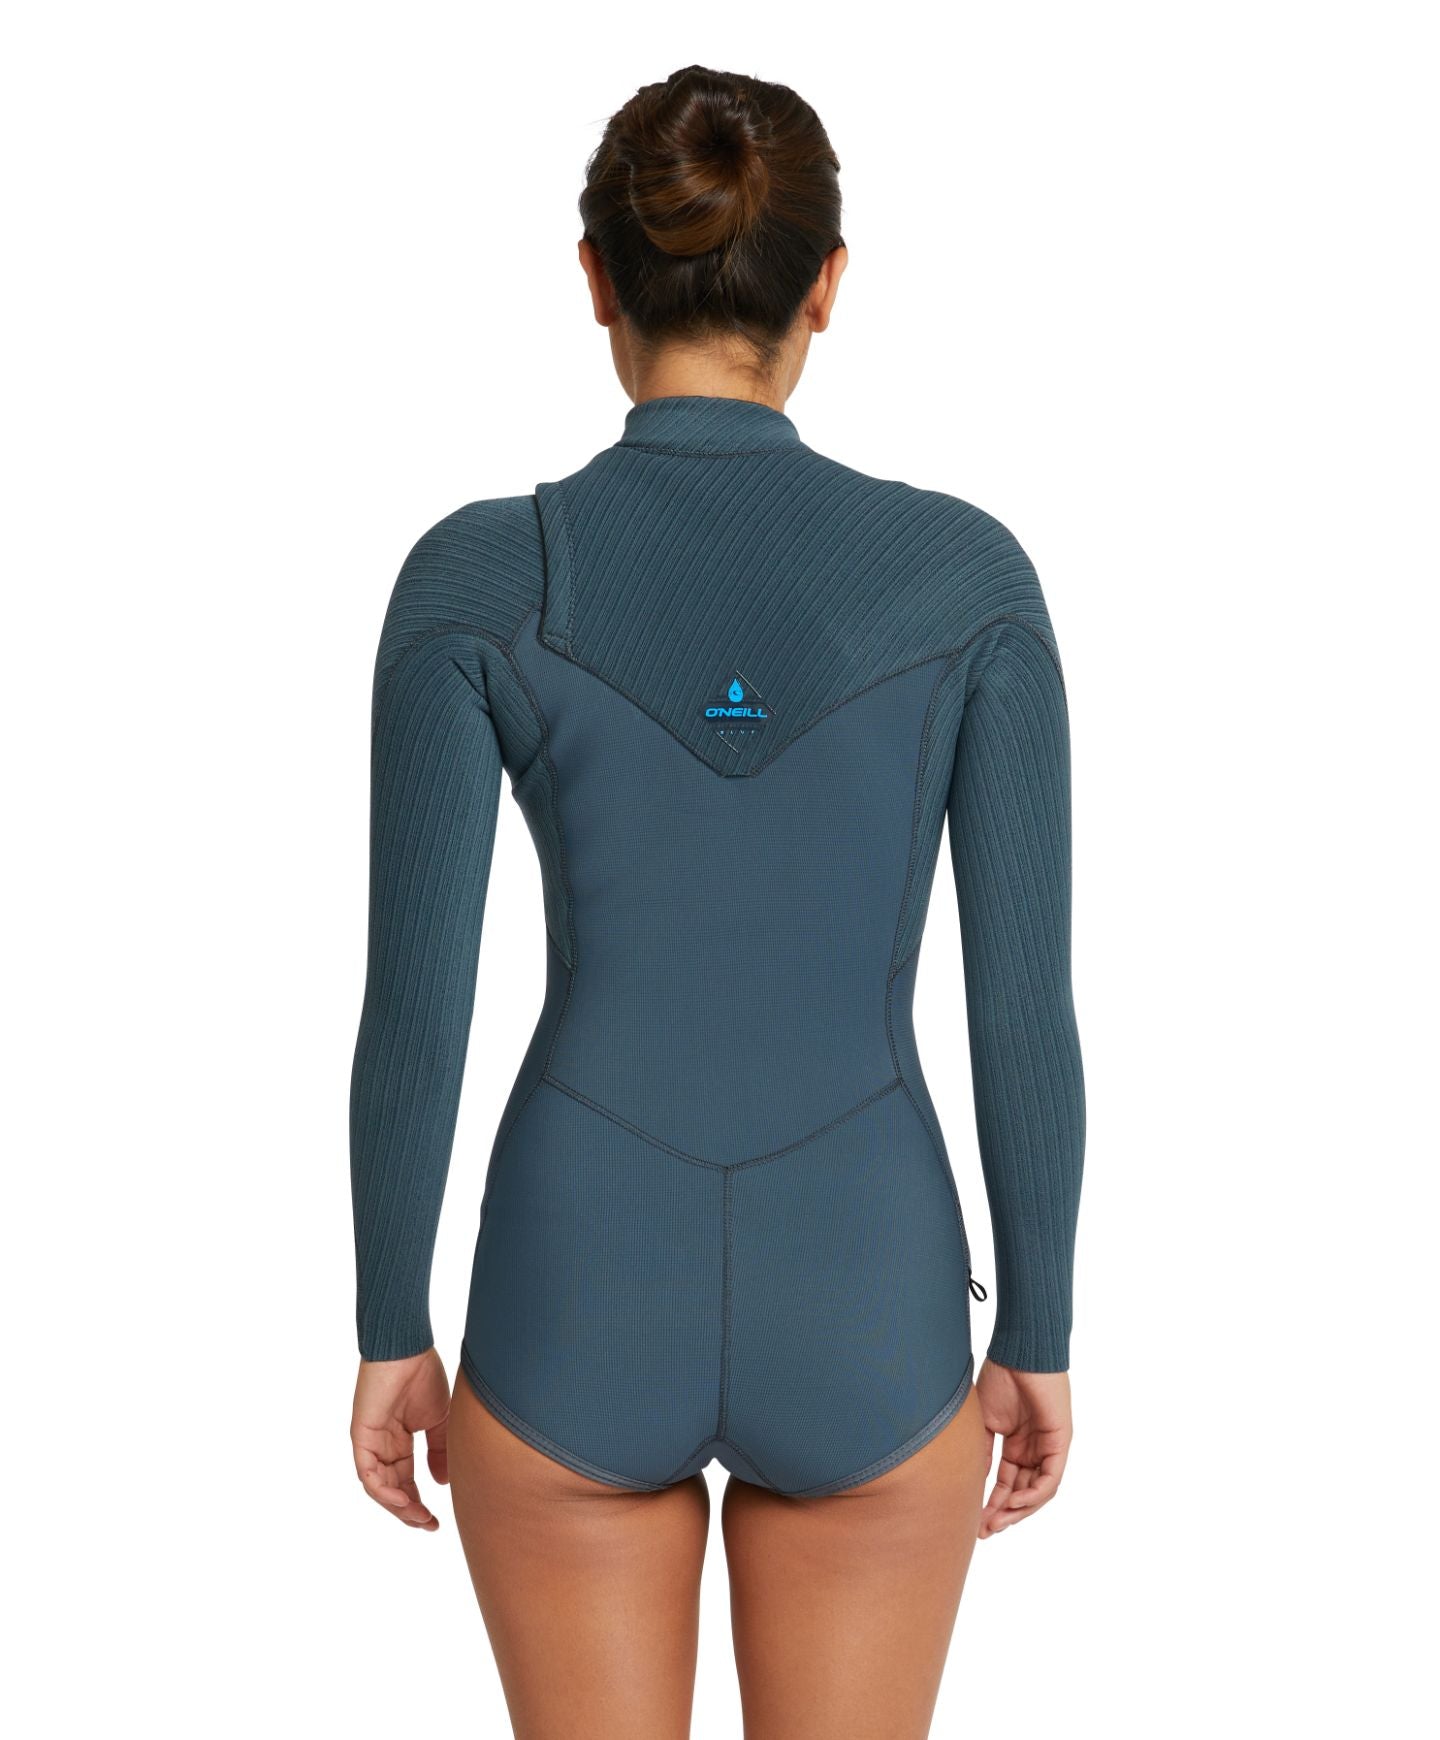 Women's HyperFreak Long Sleeve Spring Suit 2mm Wetsuit - Shade